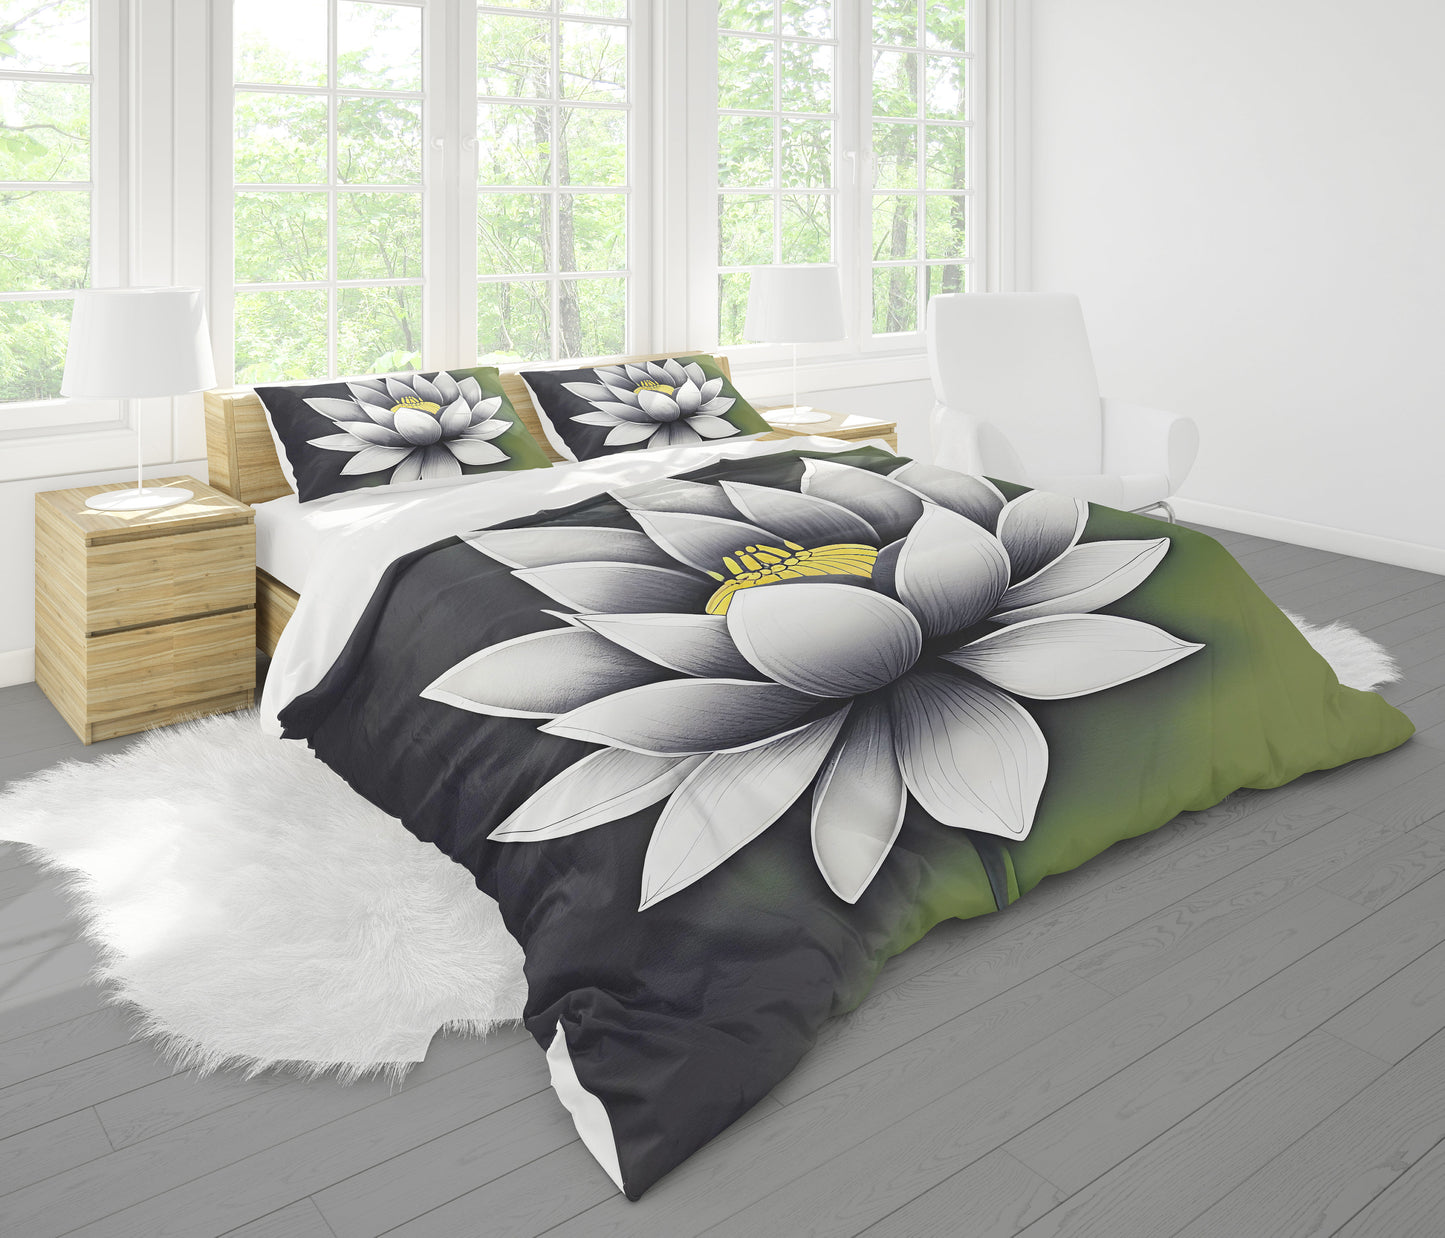 Lotus Comforter or Duvet Cover white lotus flower bedding sage green floral bedding zen comforter